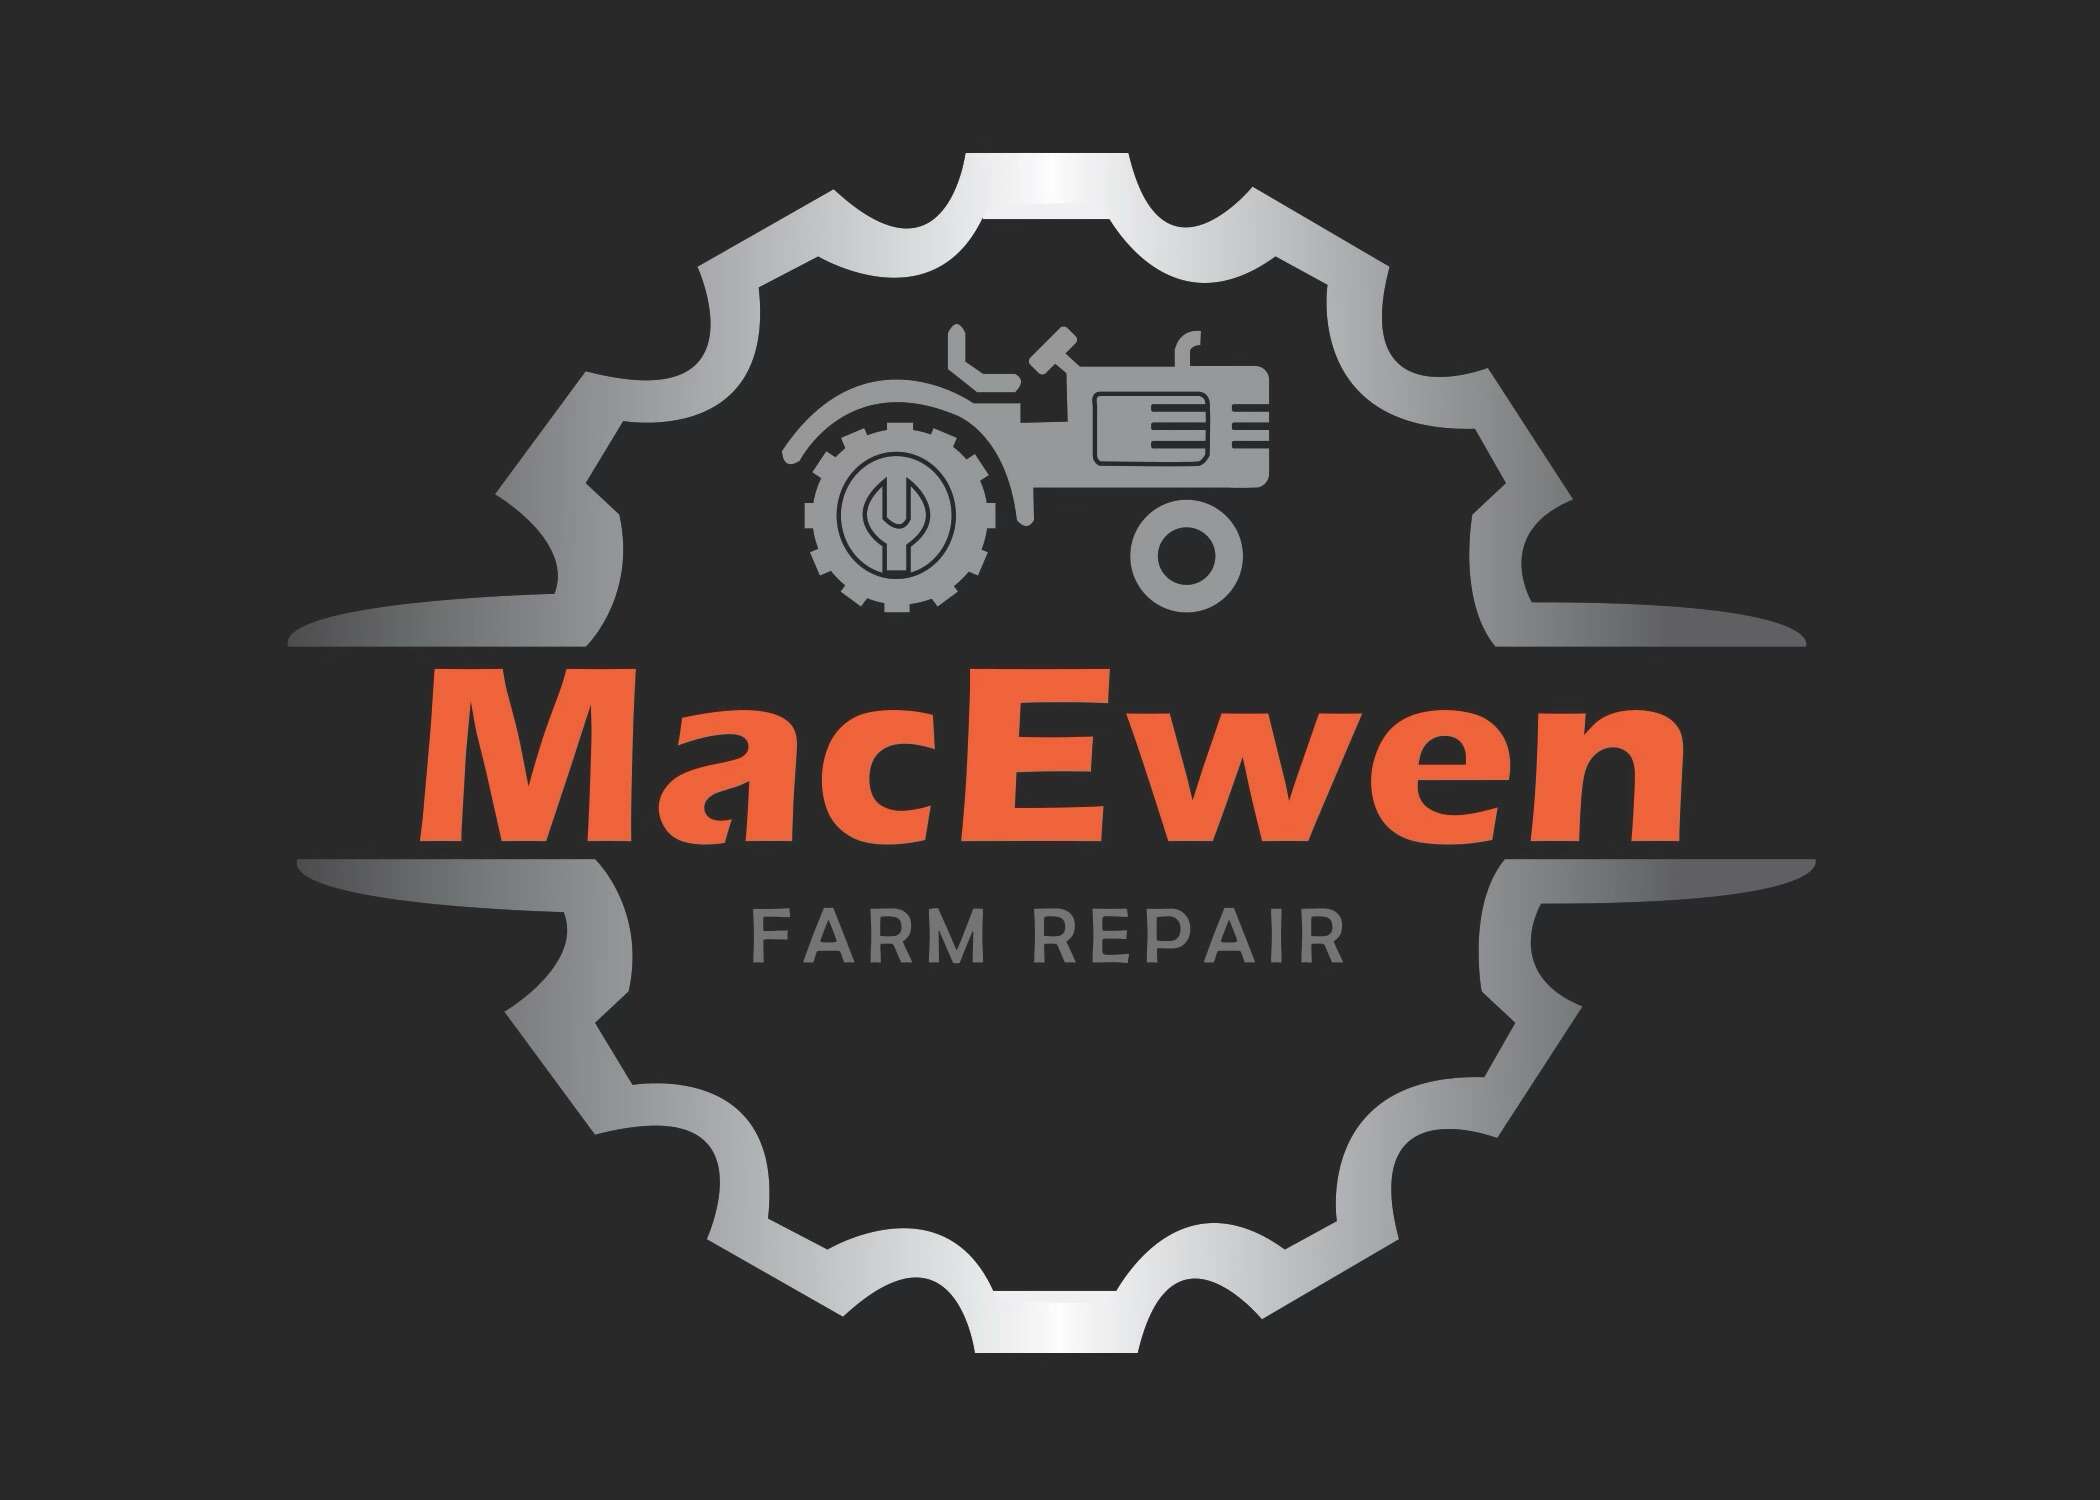 MacEwan Farm Service